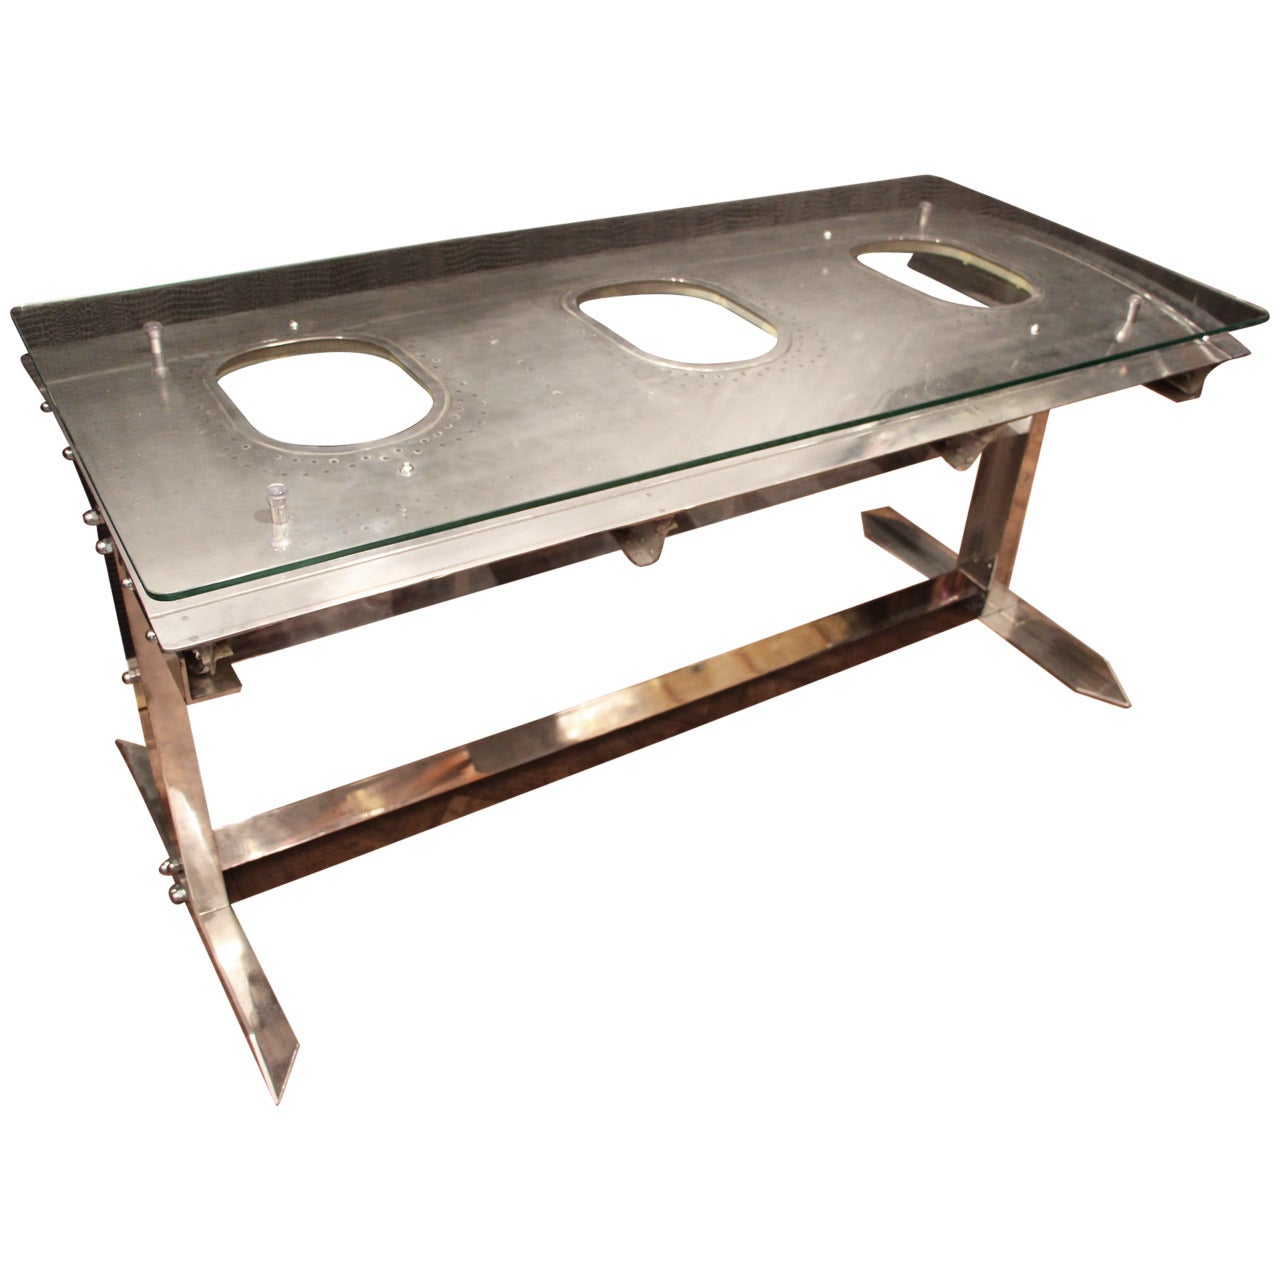 Polished Aluminium Airplane's Fuselage Desk or Table